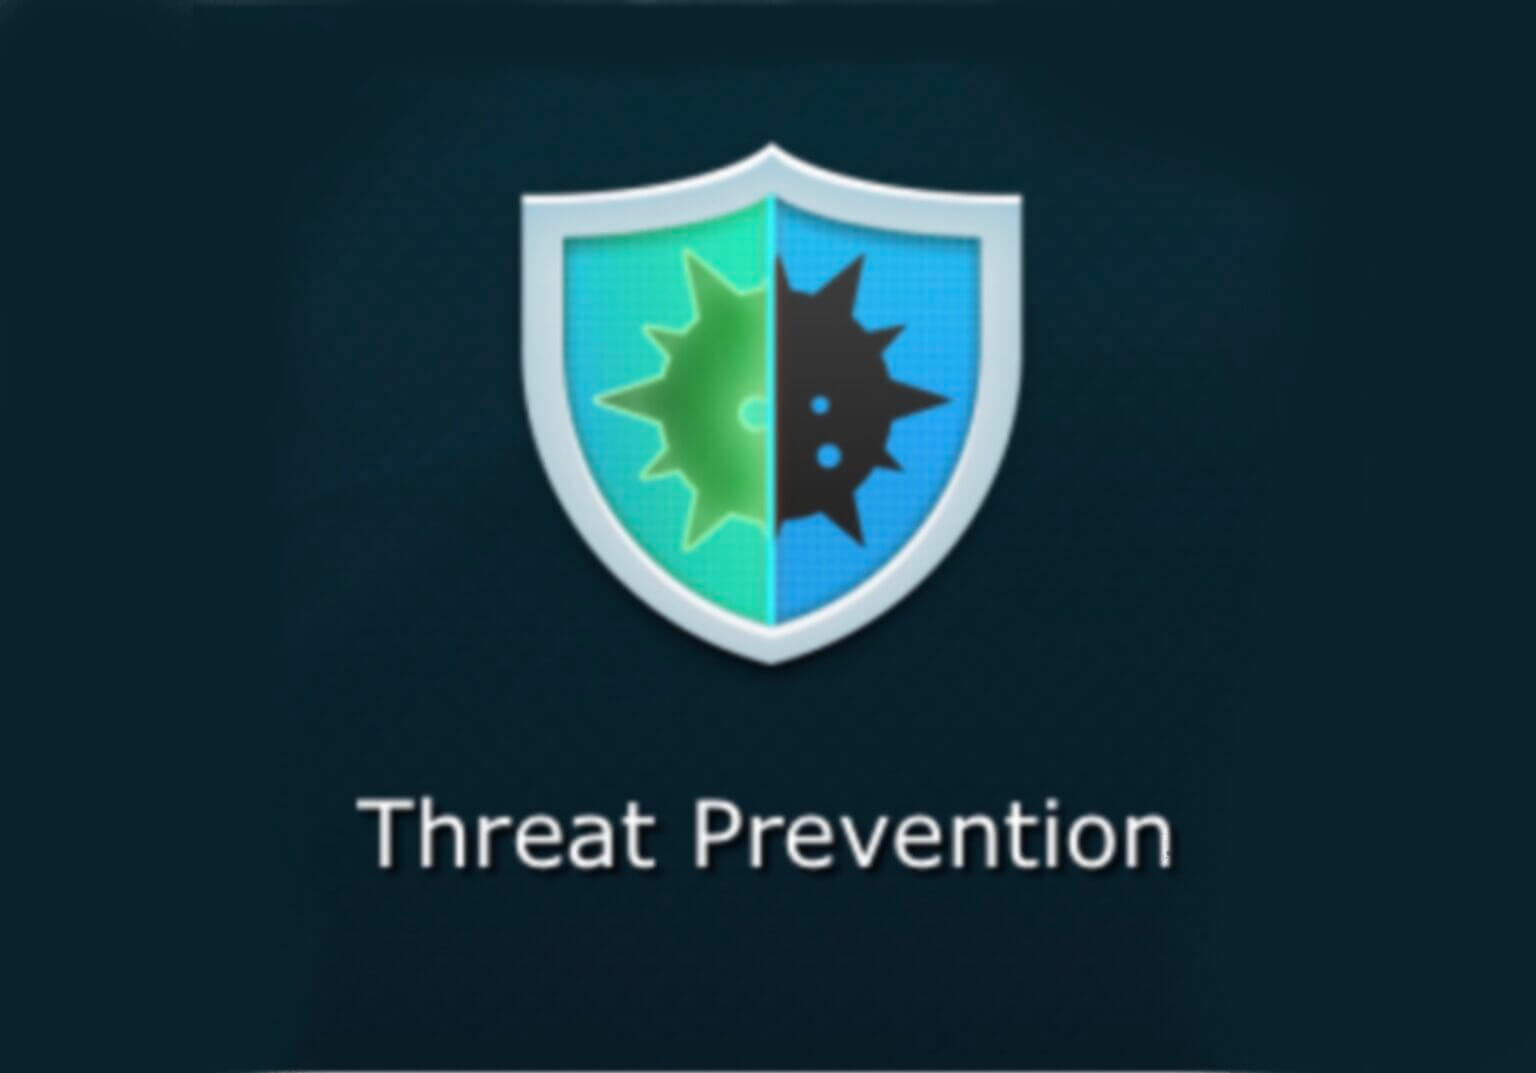 [Synology] RT2600ac – Threat Prevention ユーティリティで重大度が高いパケットのドロップ設定、ポリシー設定でローカルネットワークを守る – [2021/05/15] ID3461